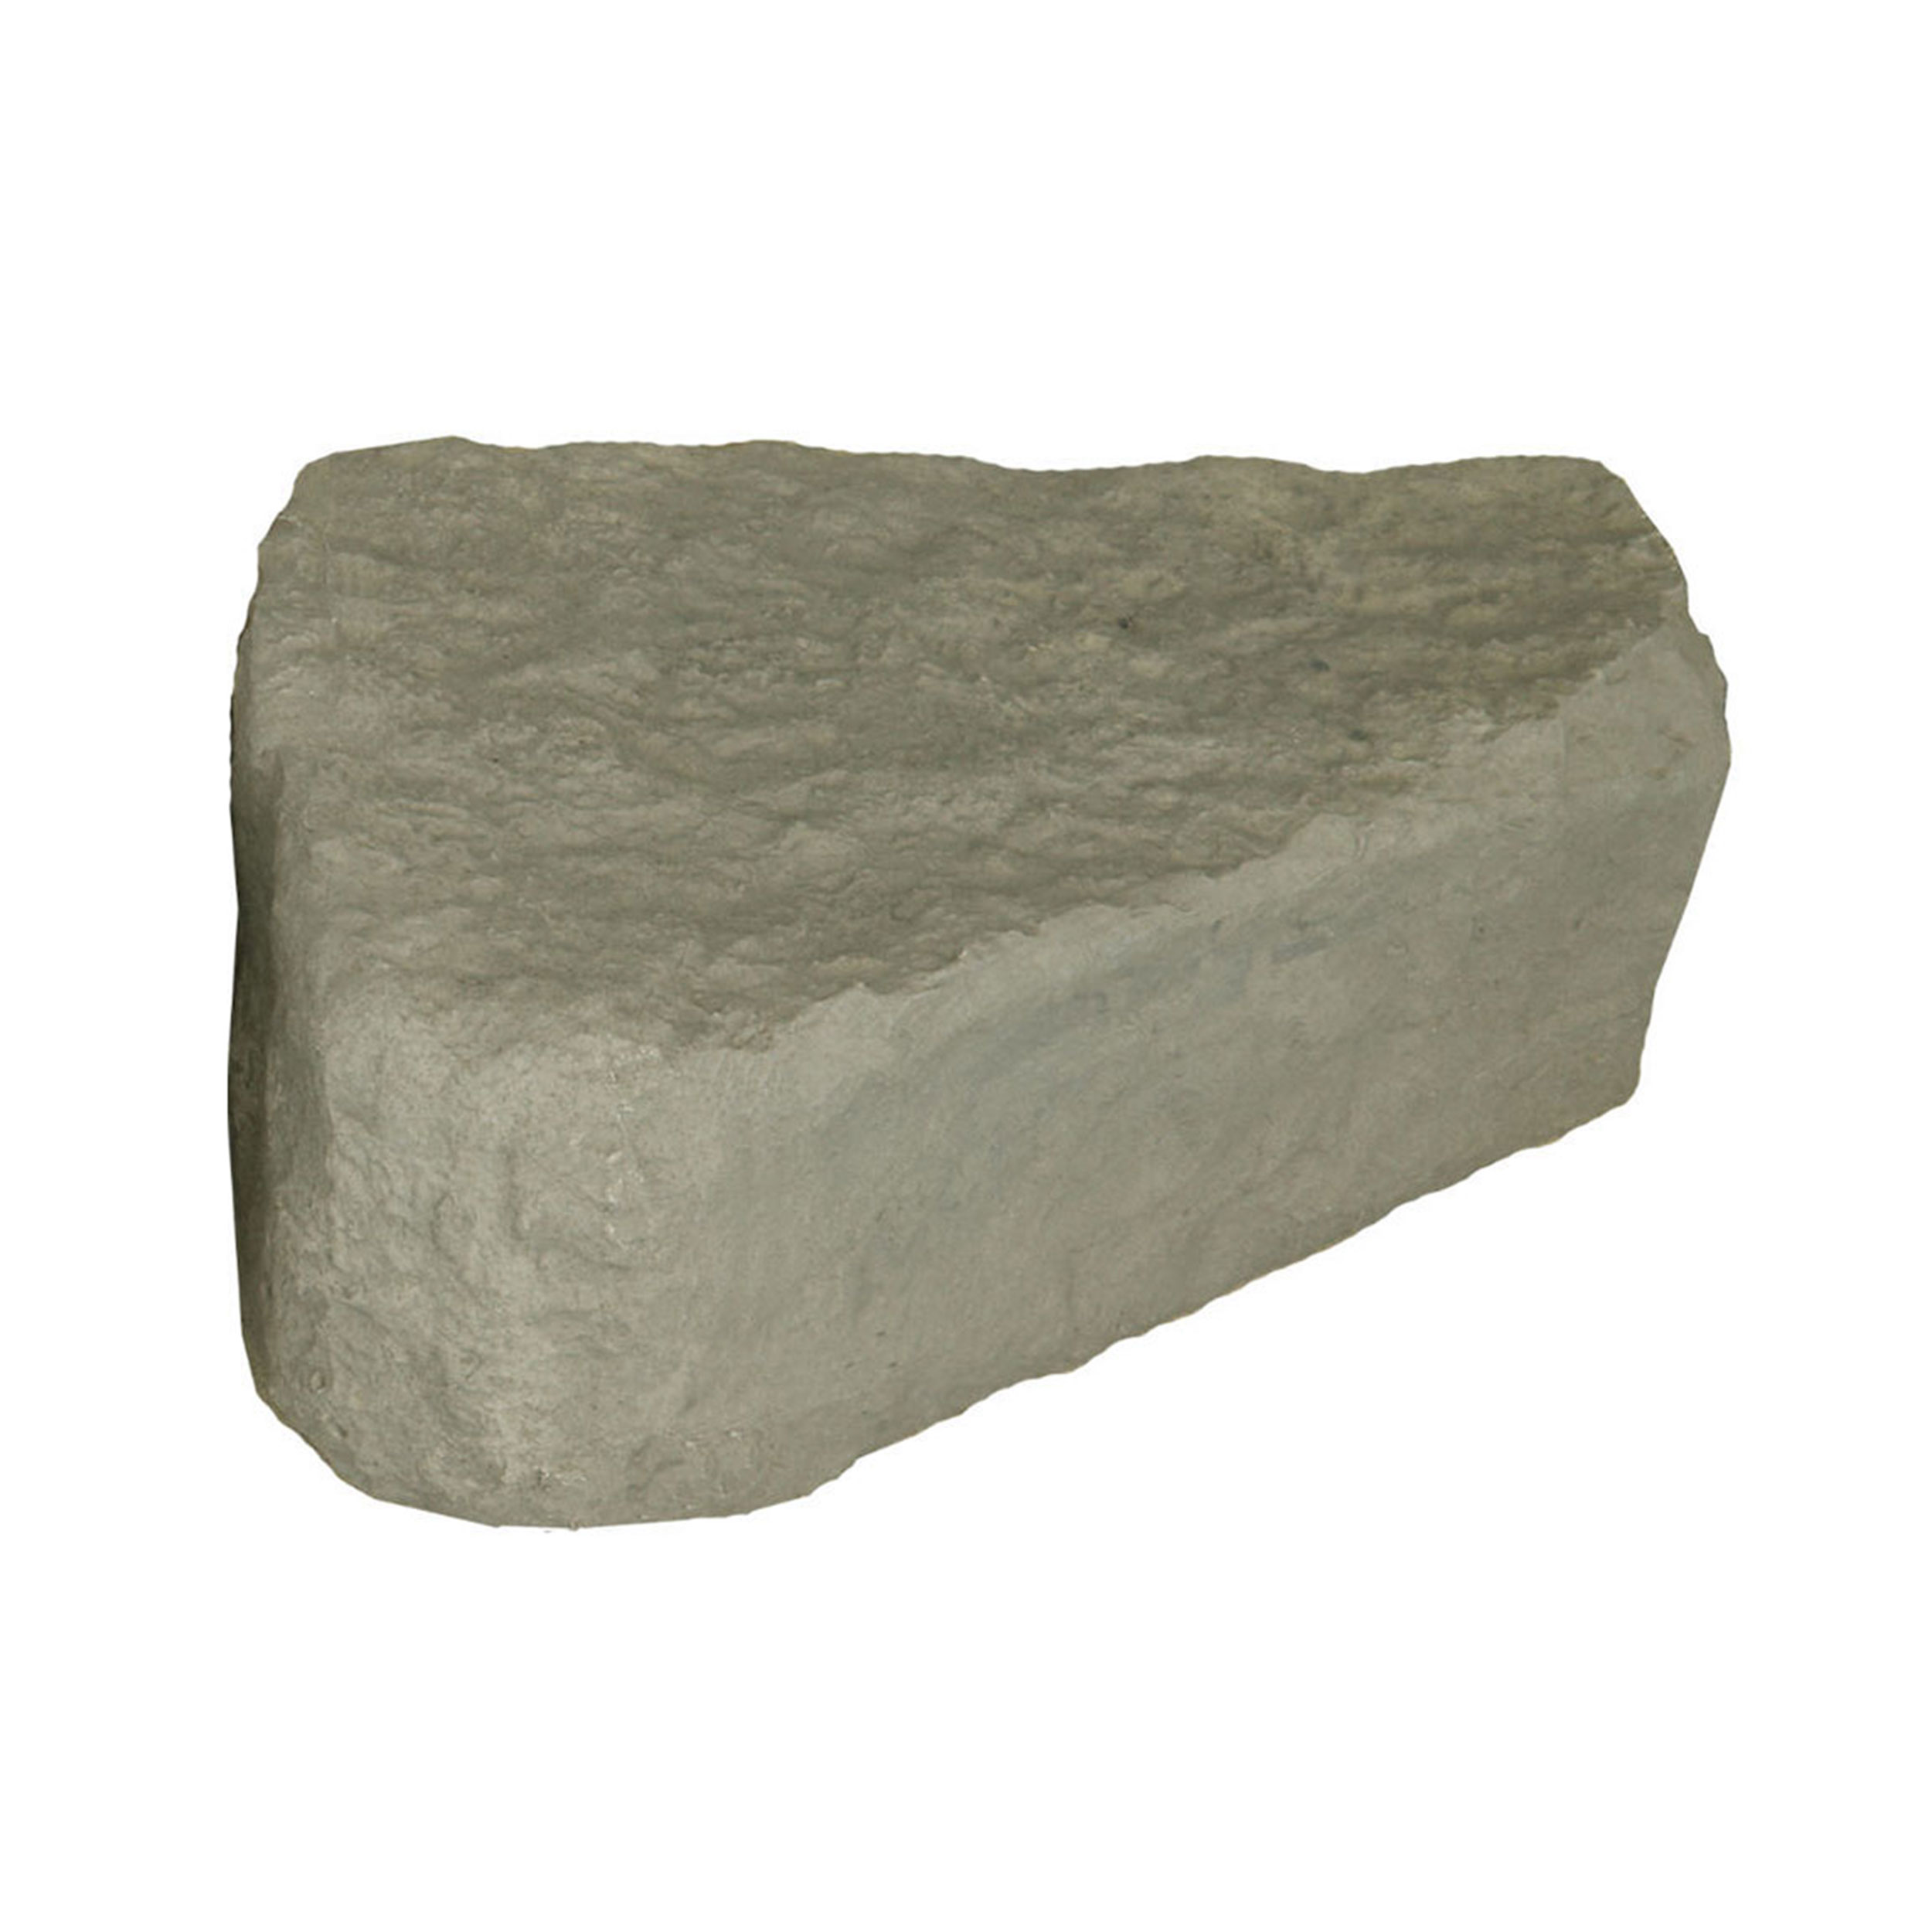 Right Triangle Landscaping Rock, Oak/armor Stone